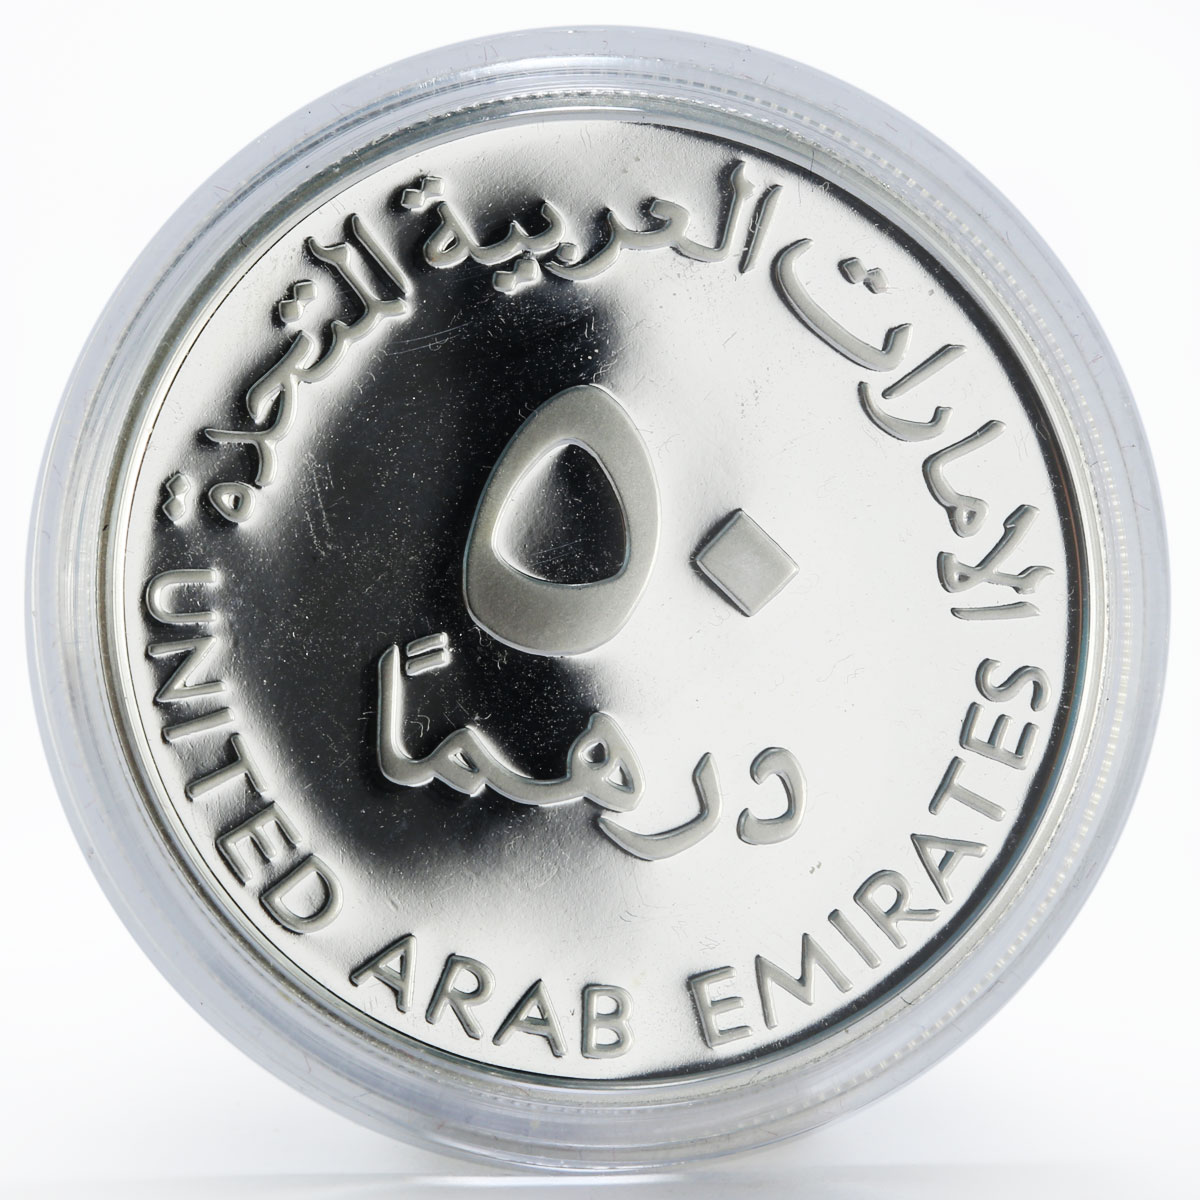 United Arab Emirates 50 dirhams Sheikh Award Medical Sciences proof silver 2002